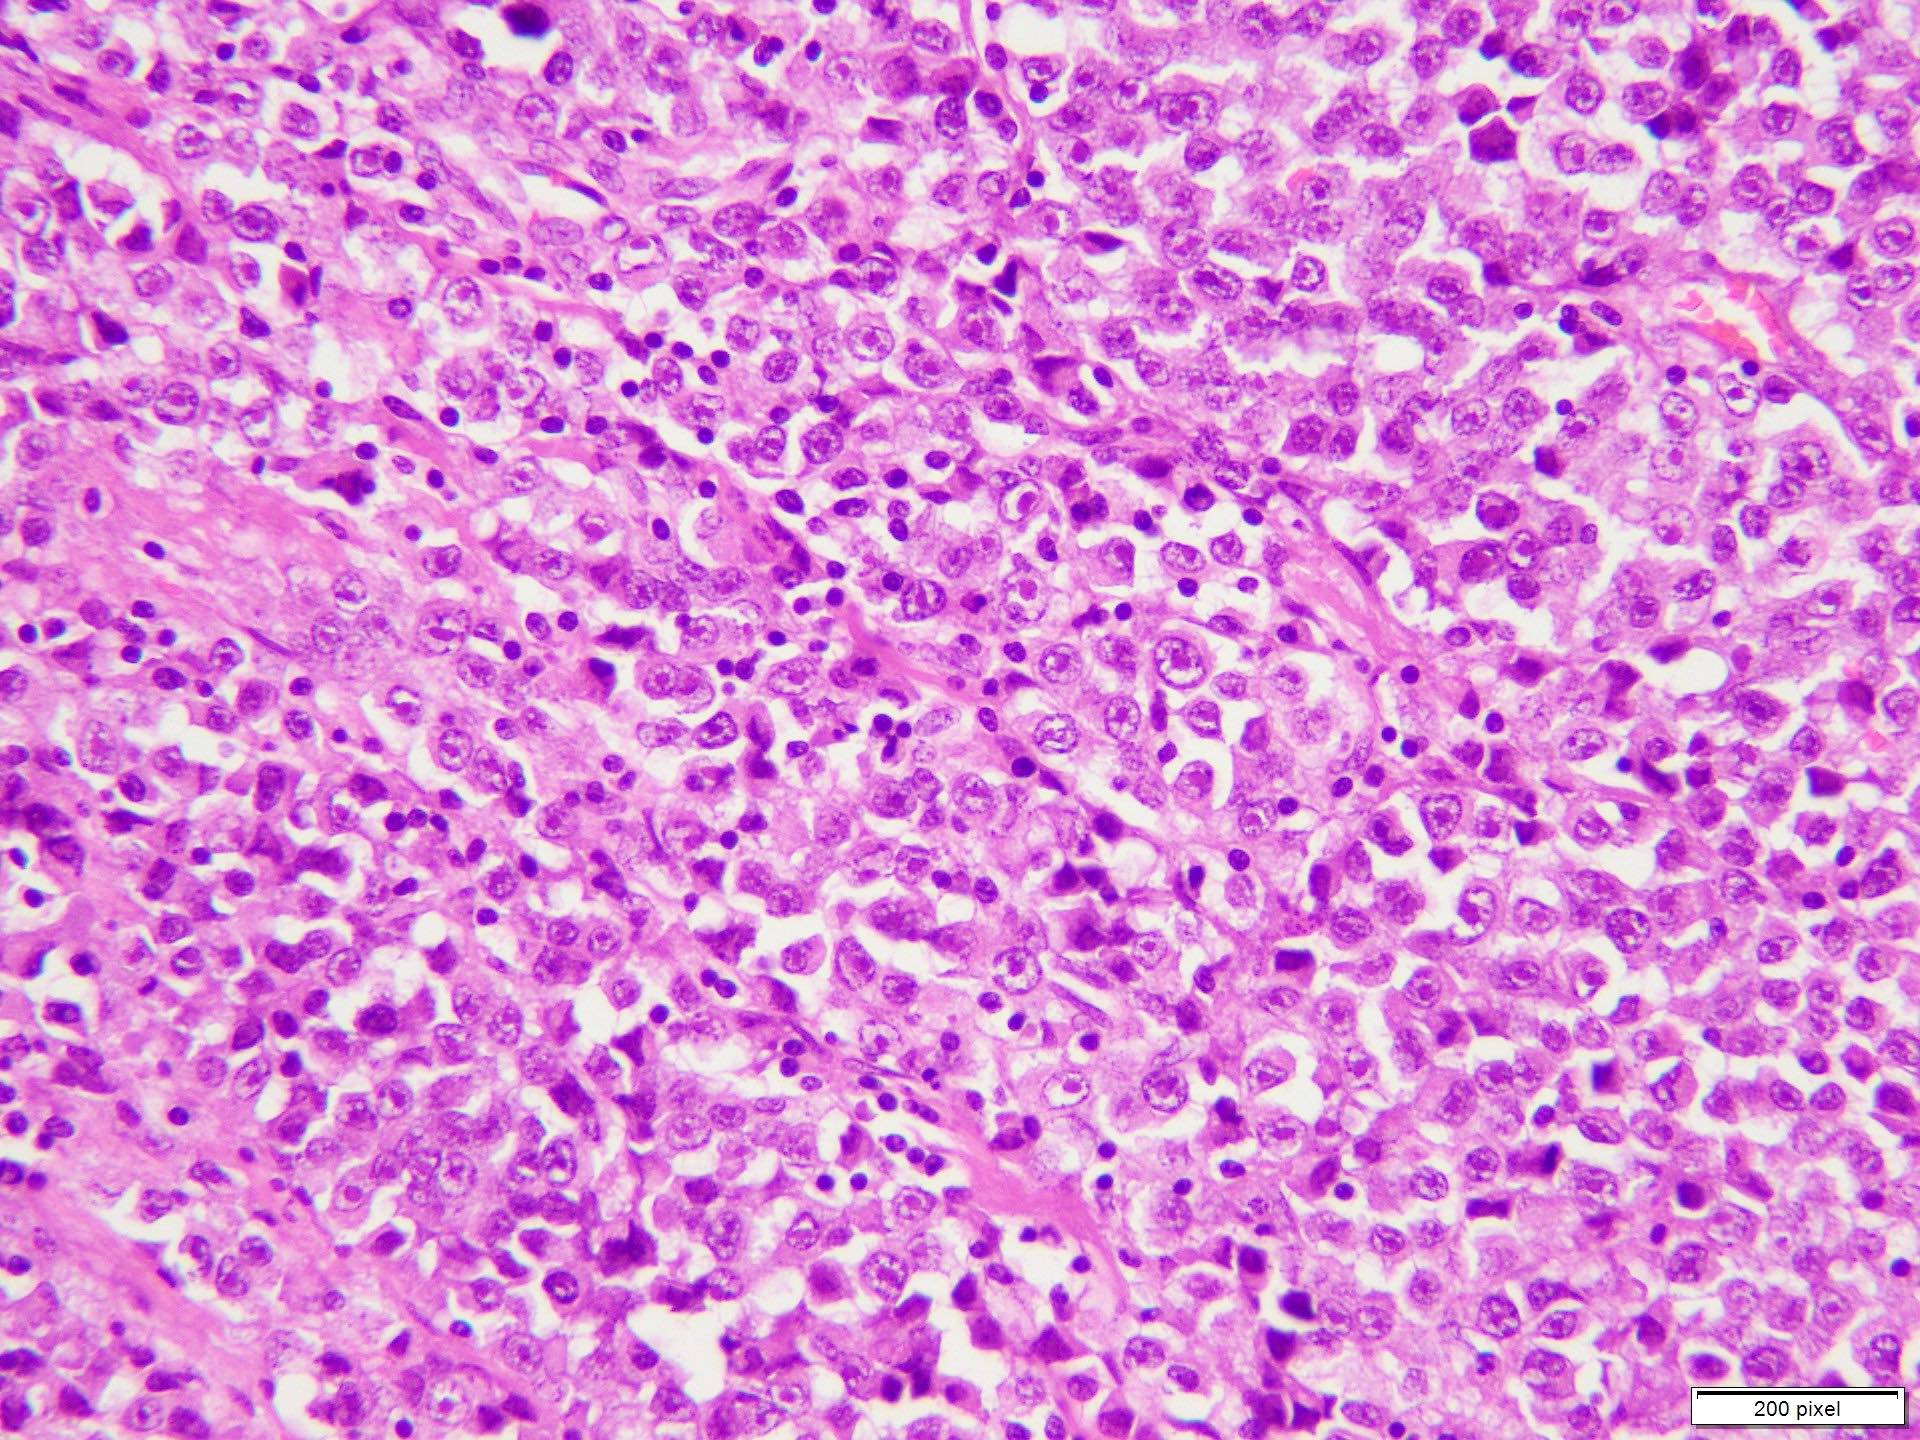 Nonbrisk tumor infiltrating lymphocytes